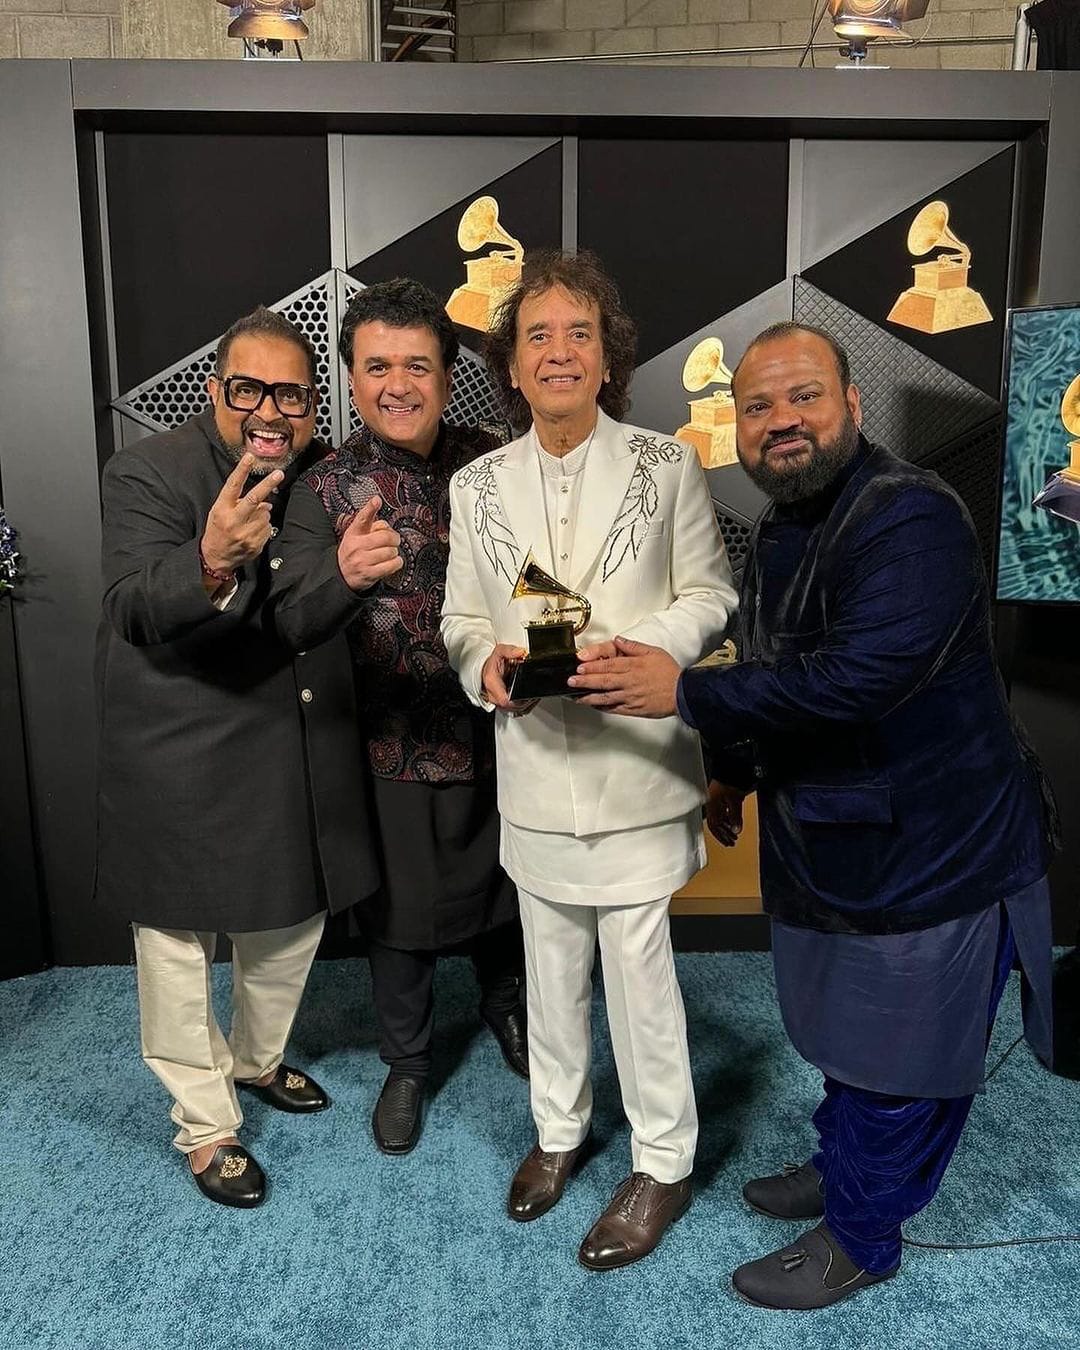 Shakti Shines: Shankar Mahadevan and Zakir Hussain Clinch Grammy for Best Global Music Album